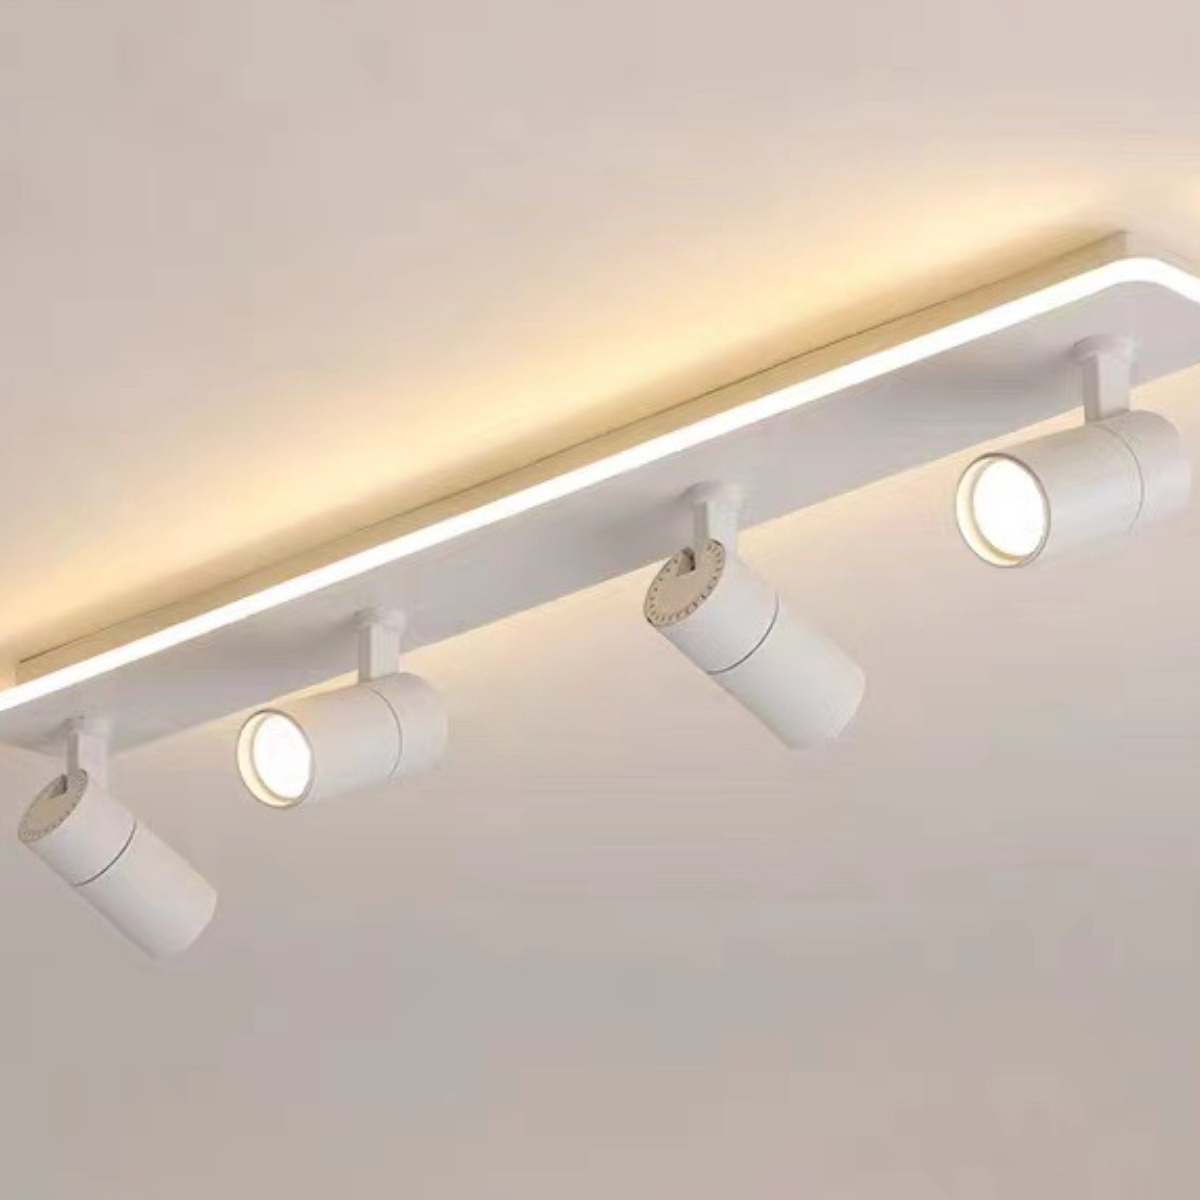 UWOT mehrfarbig beleuchten Innenkorridore LED-Lampe Dreifarbige LED-Schienenstrahler: Leuchten perfekt